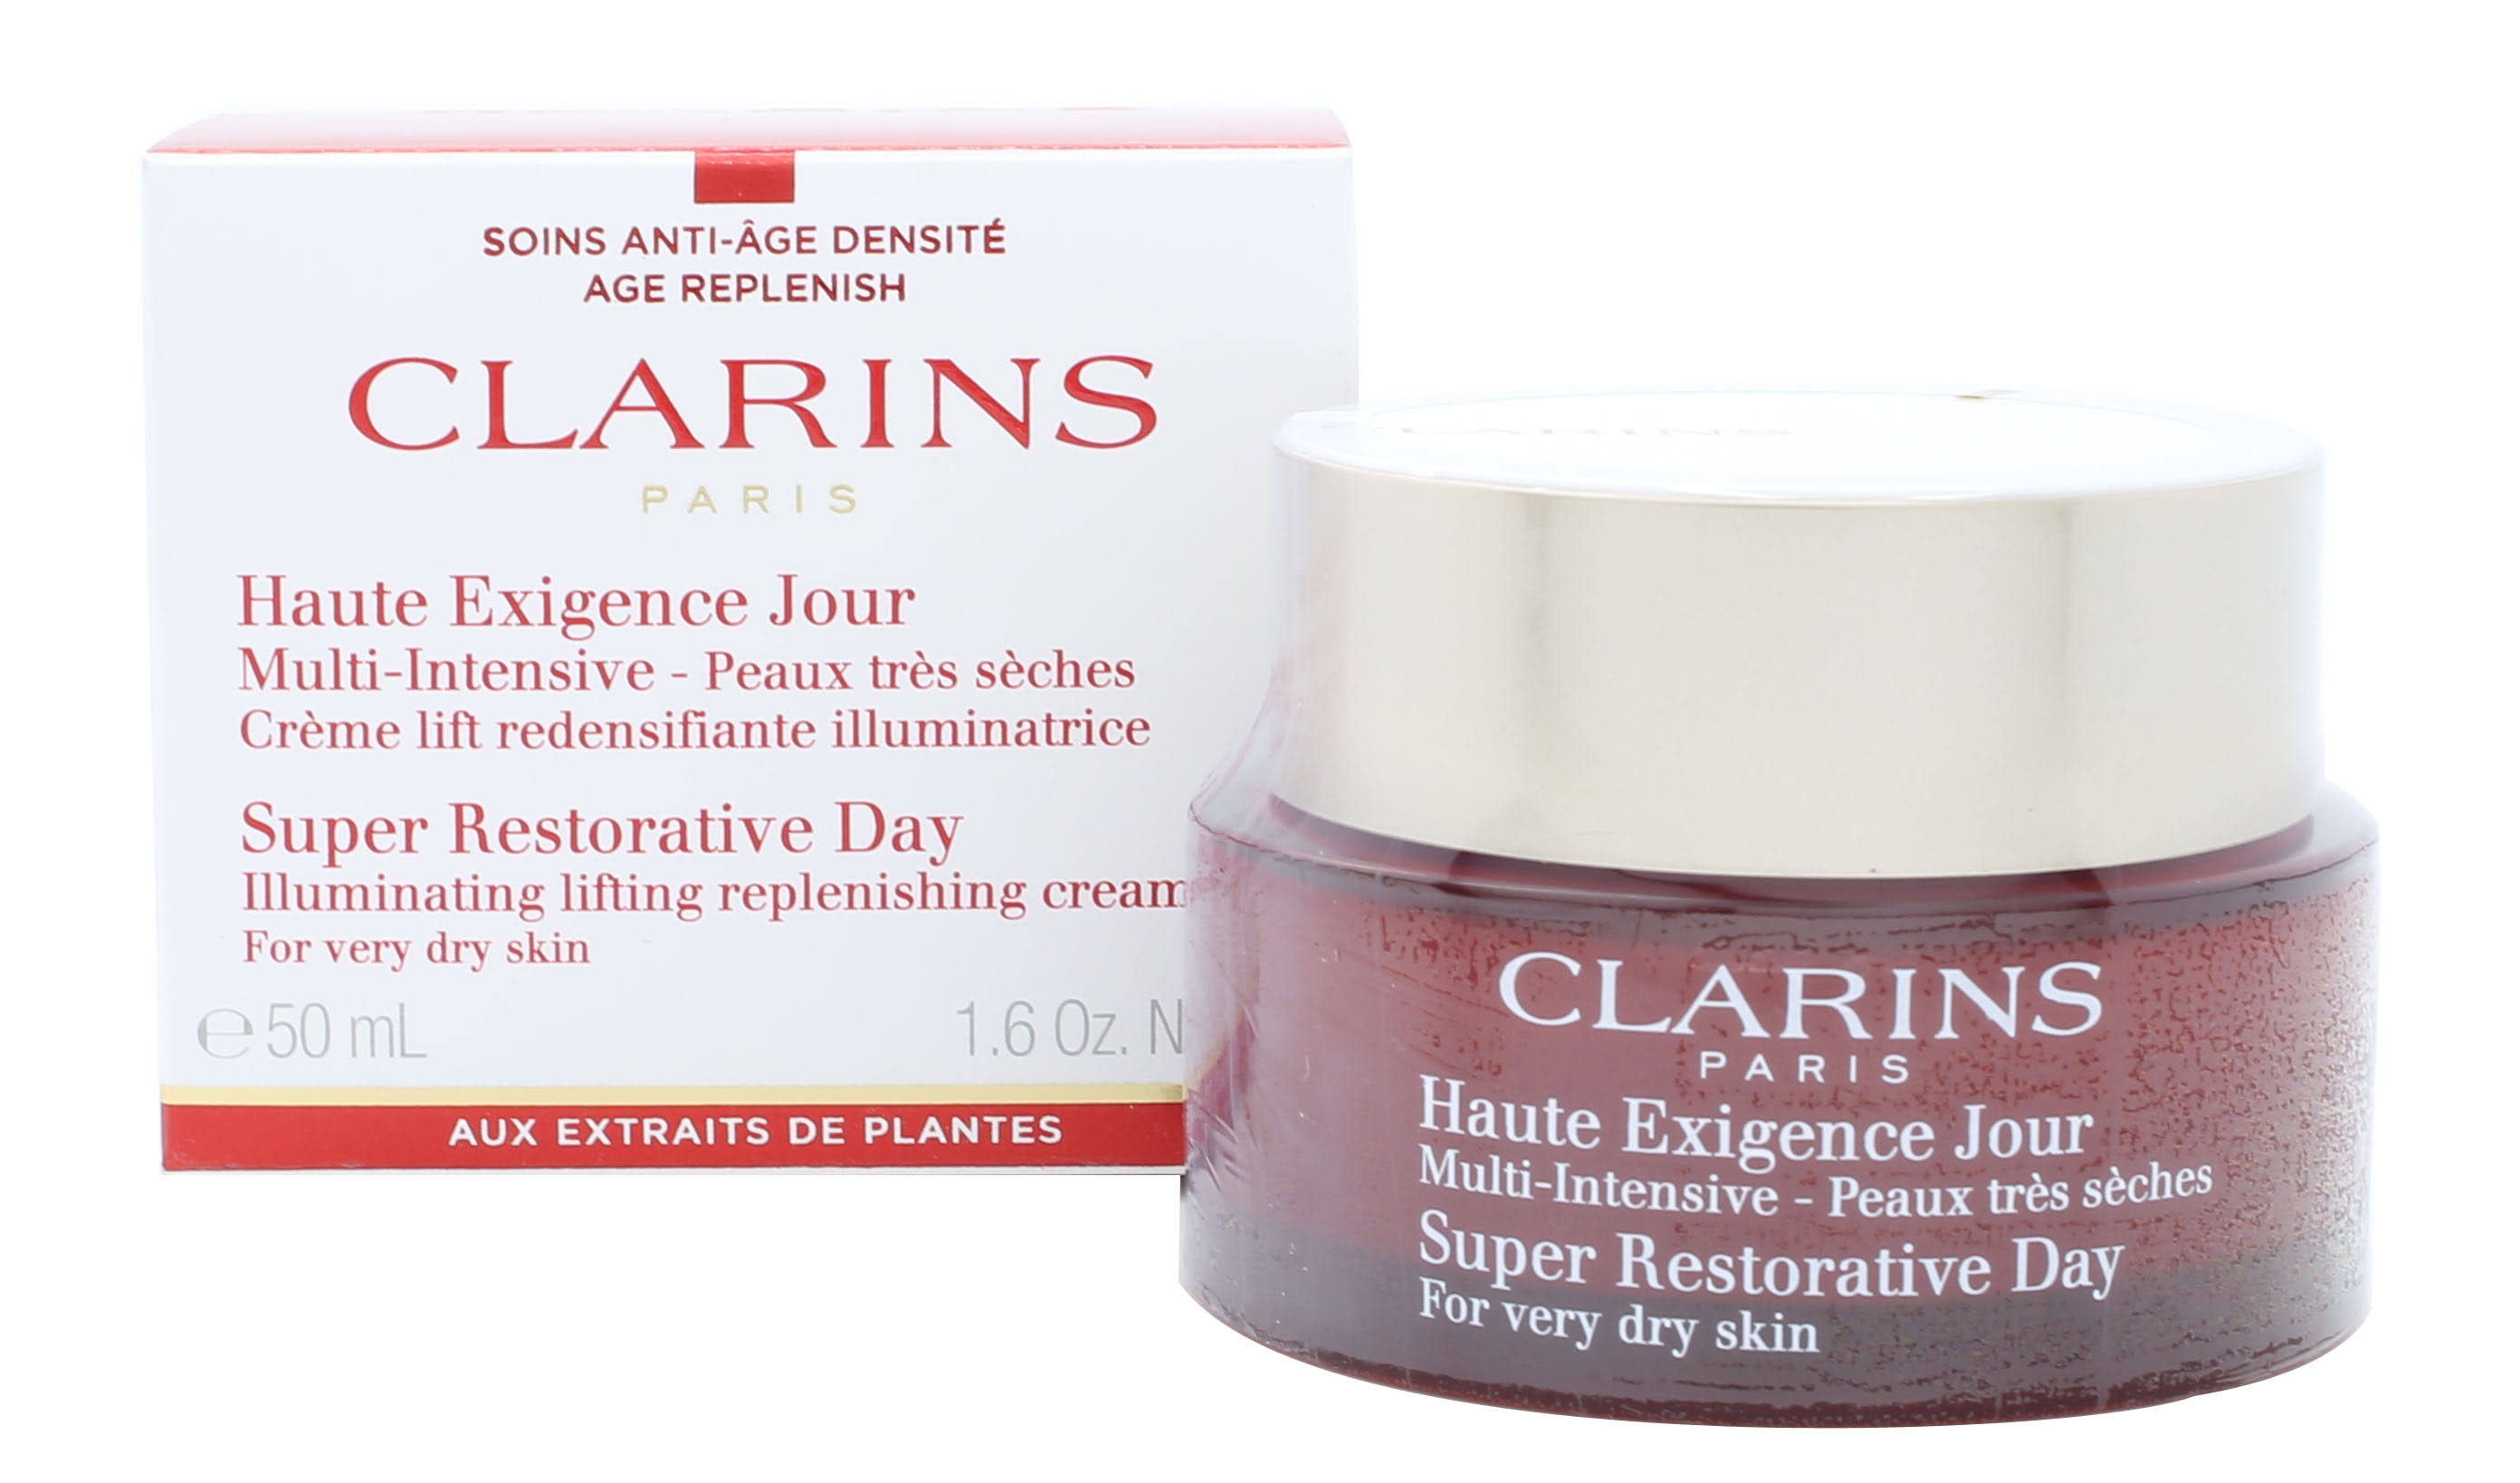 Clarins Super Restorative Day Cream - Very Dry Skin